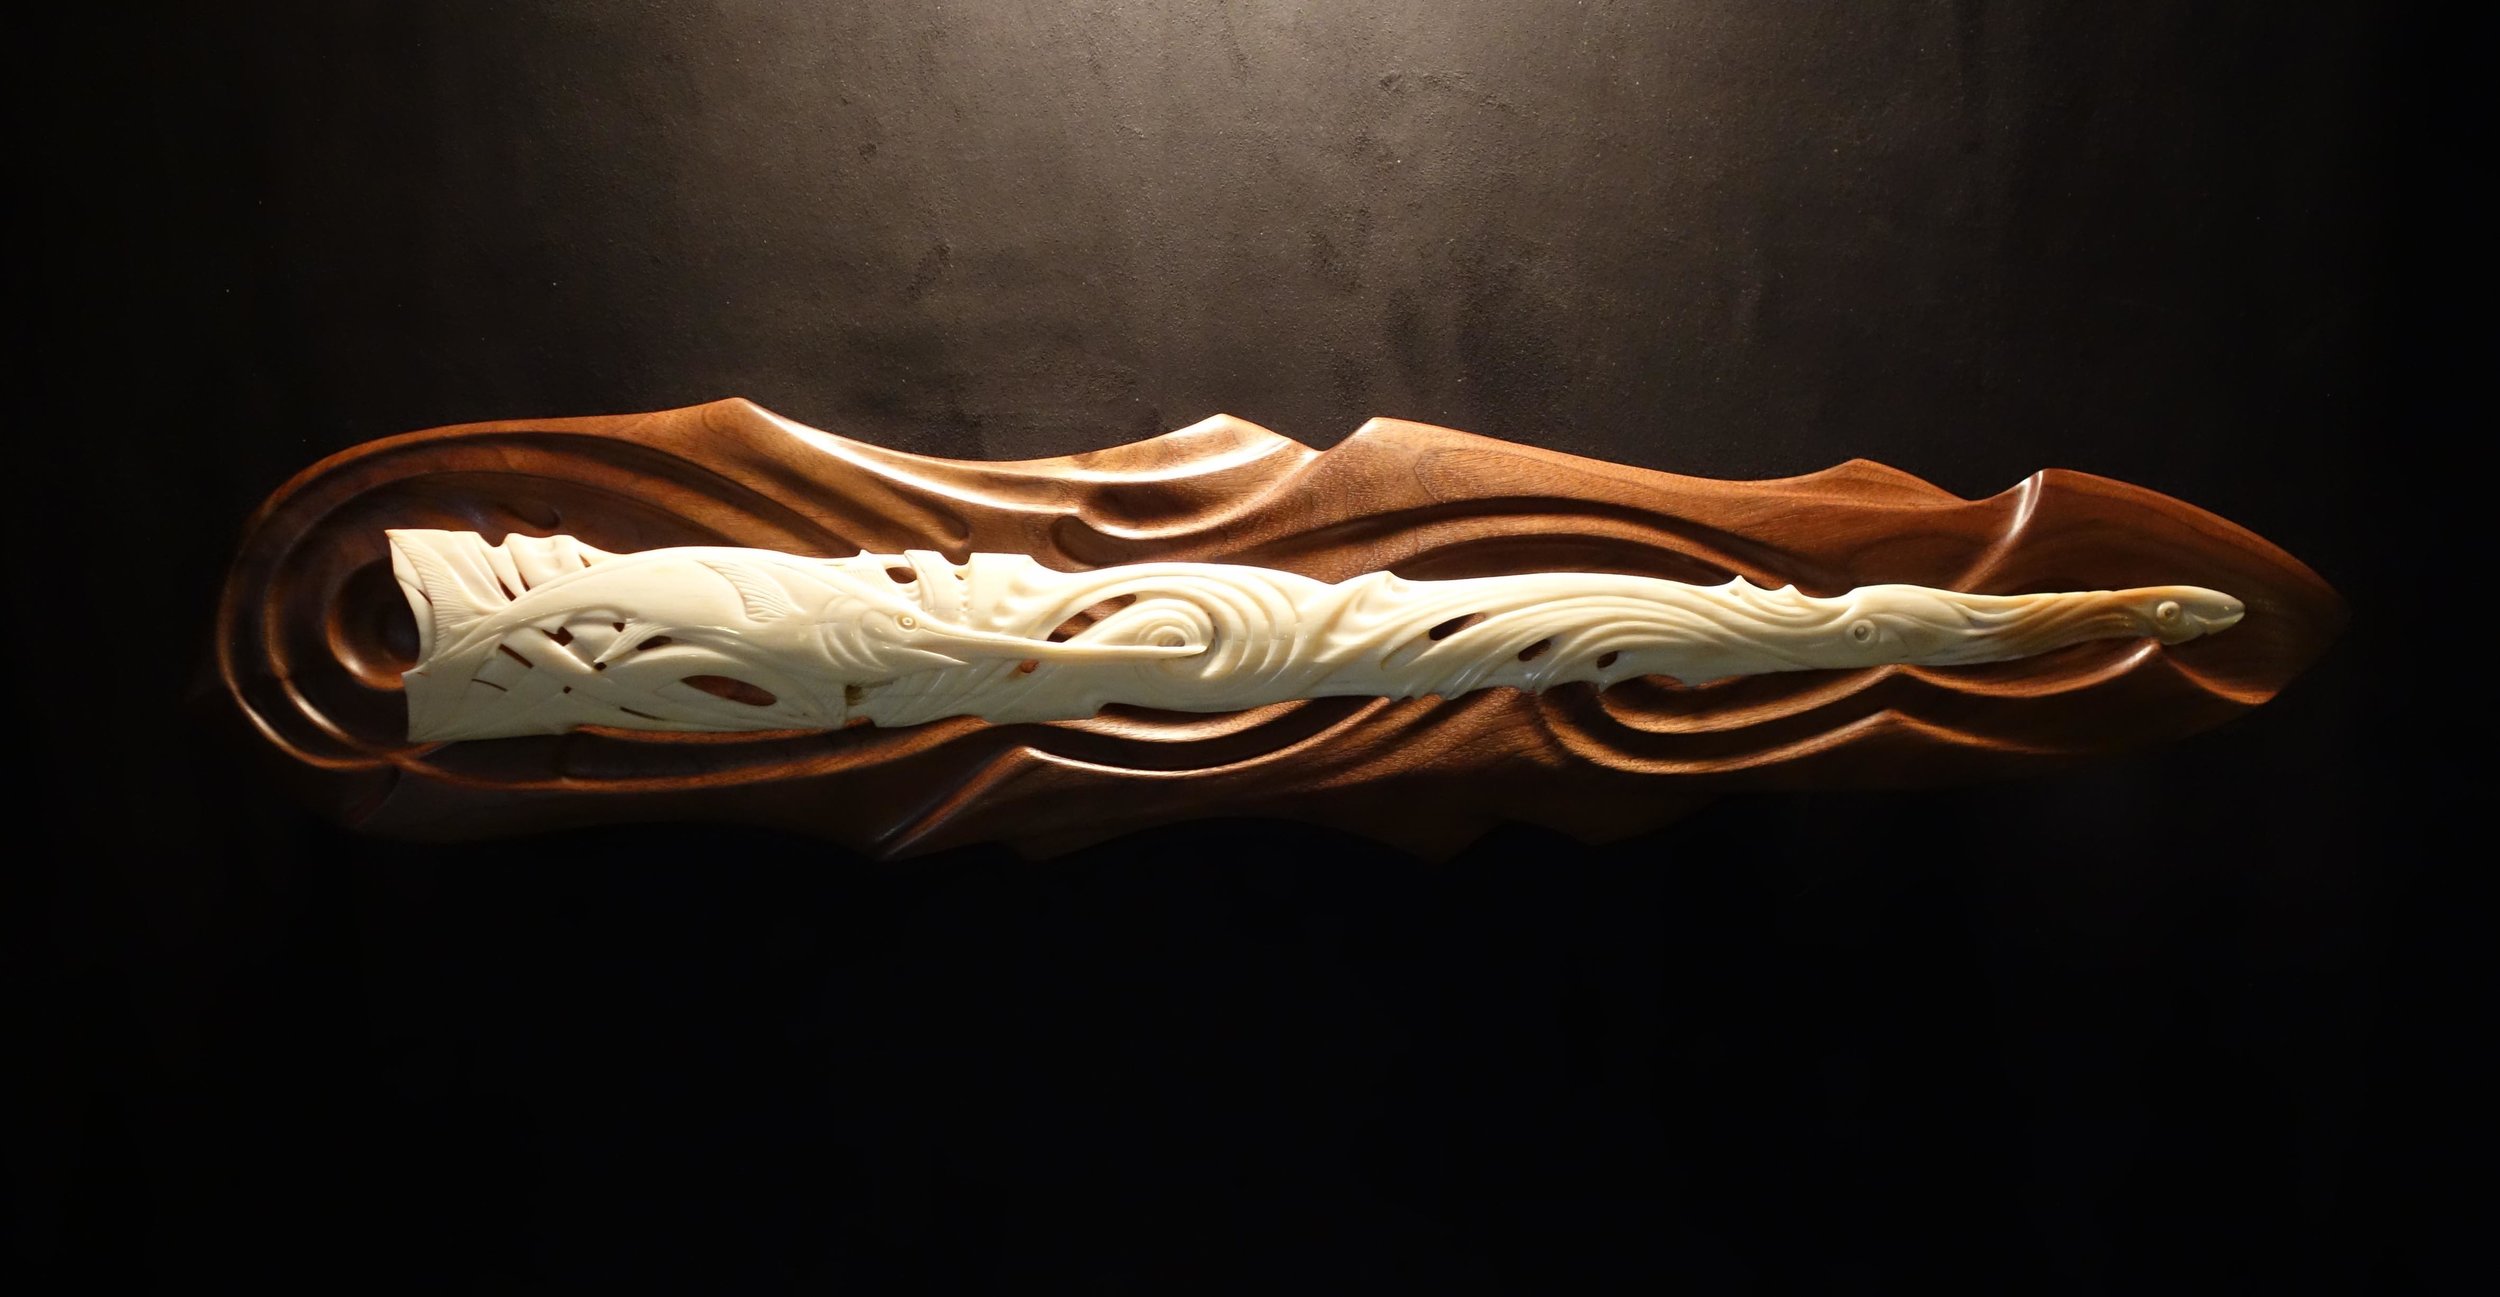 swordfish bill carving